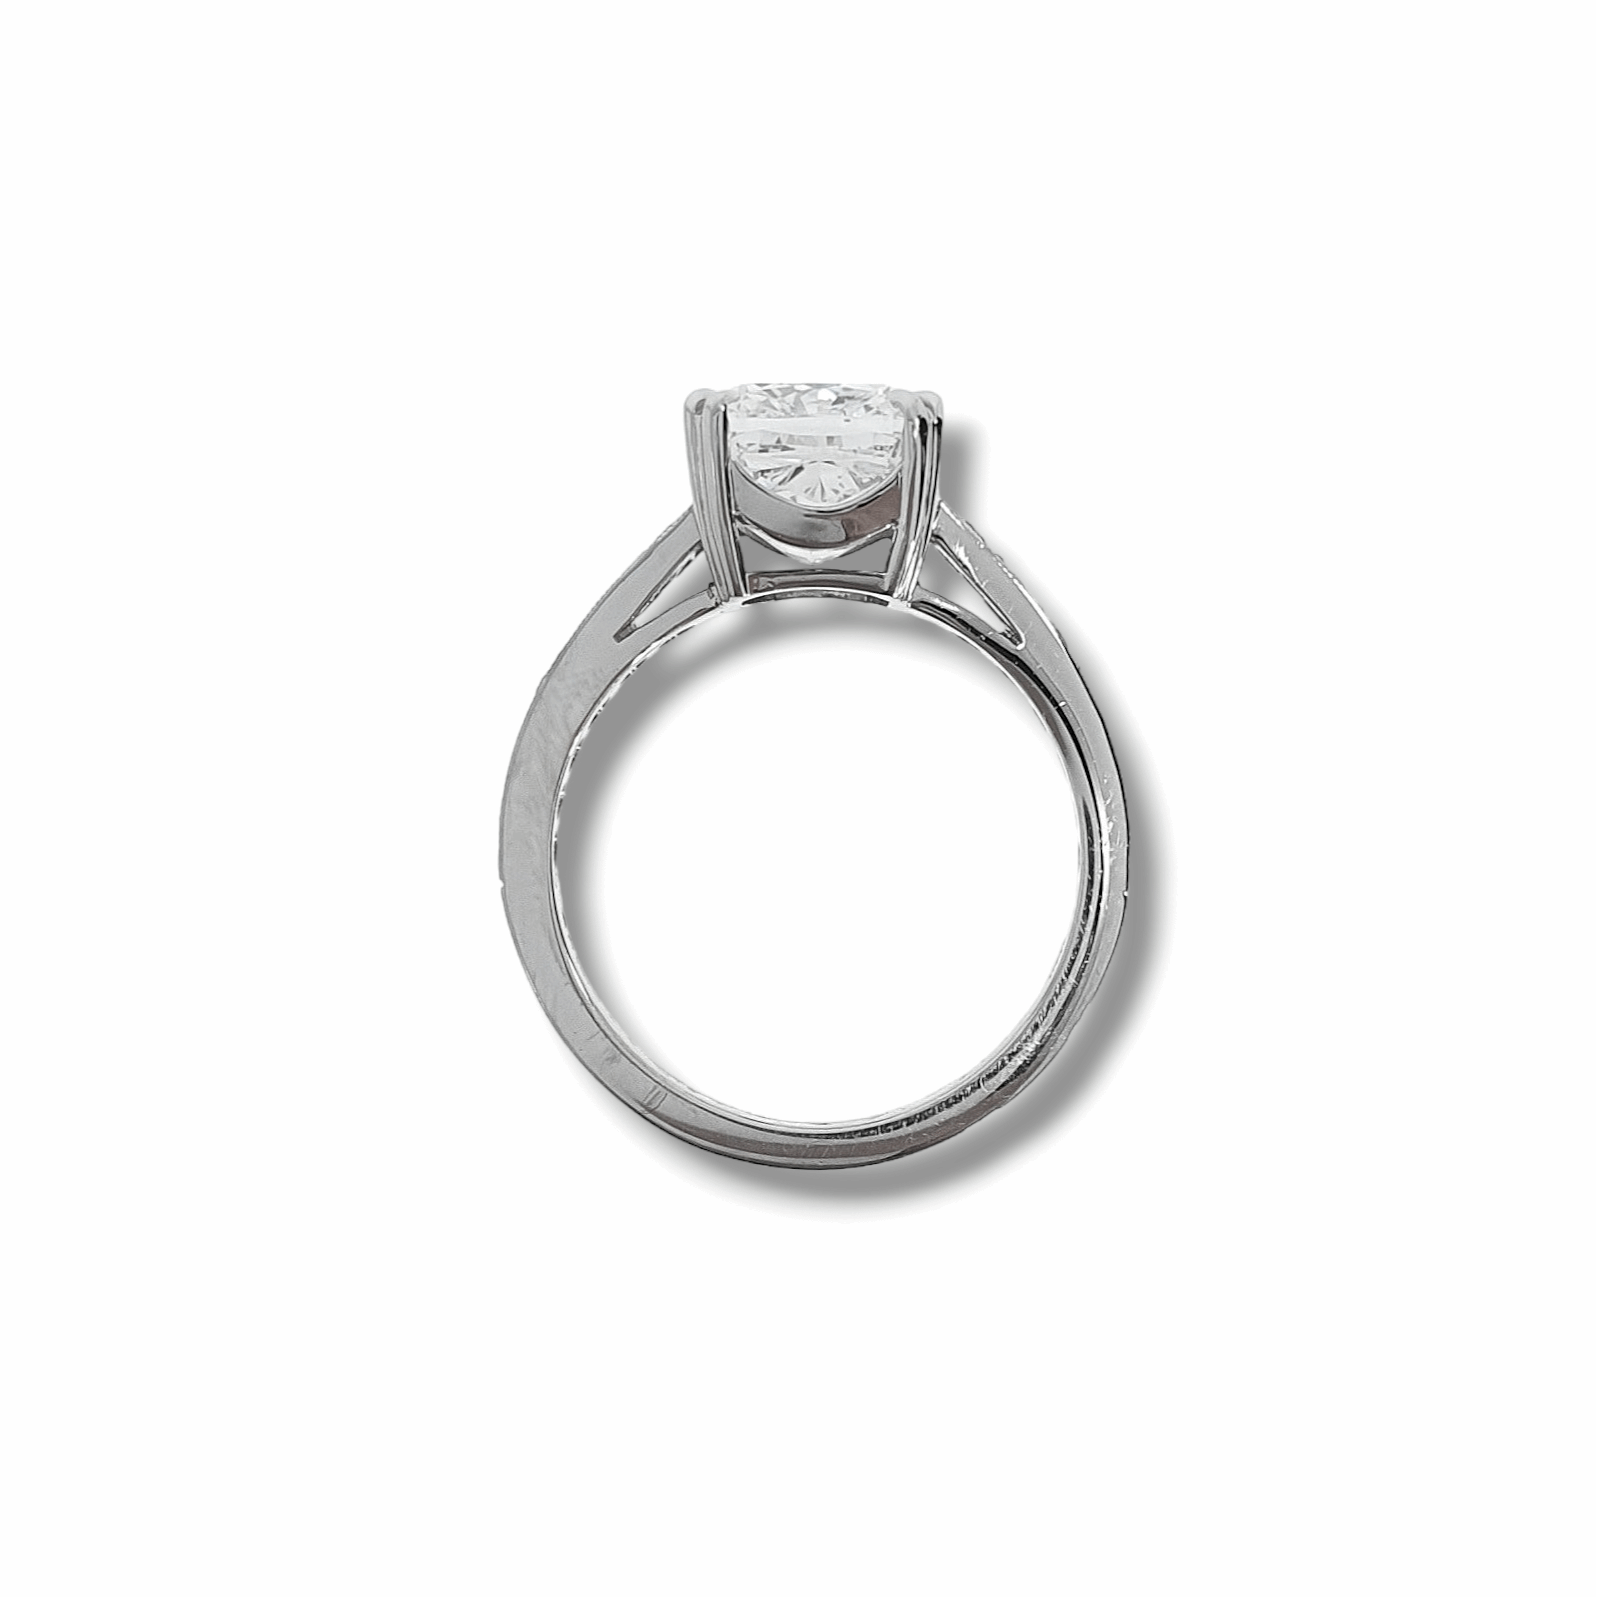 3.51ct Cushion Cut Diamond Ring